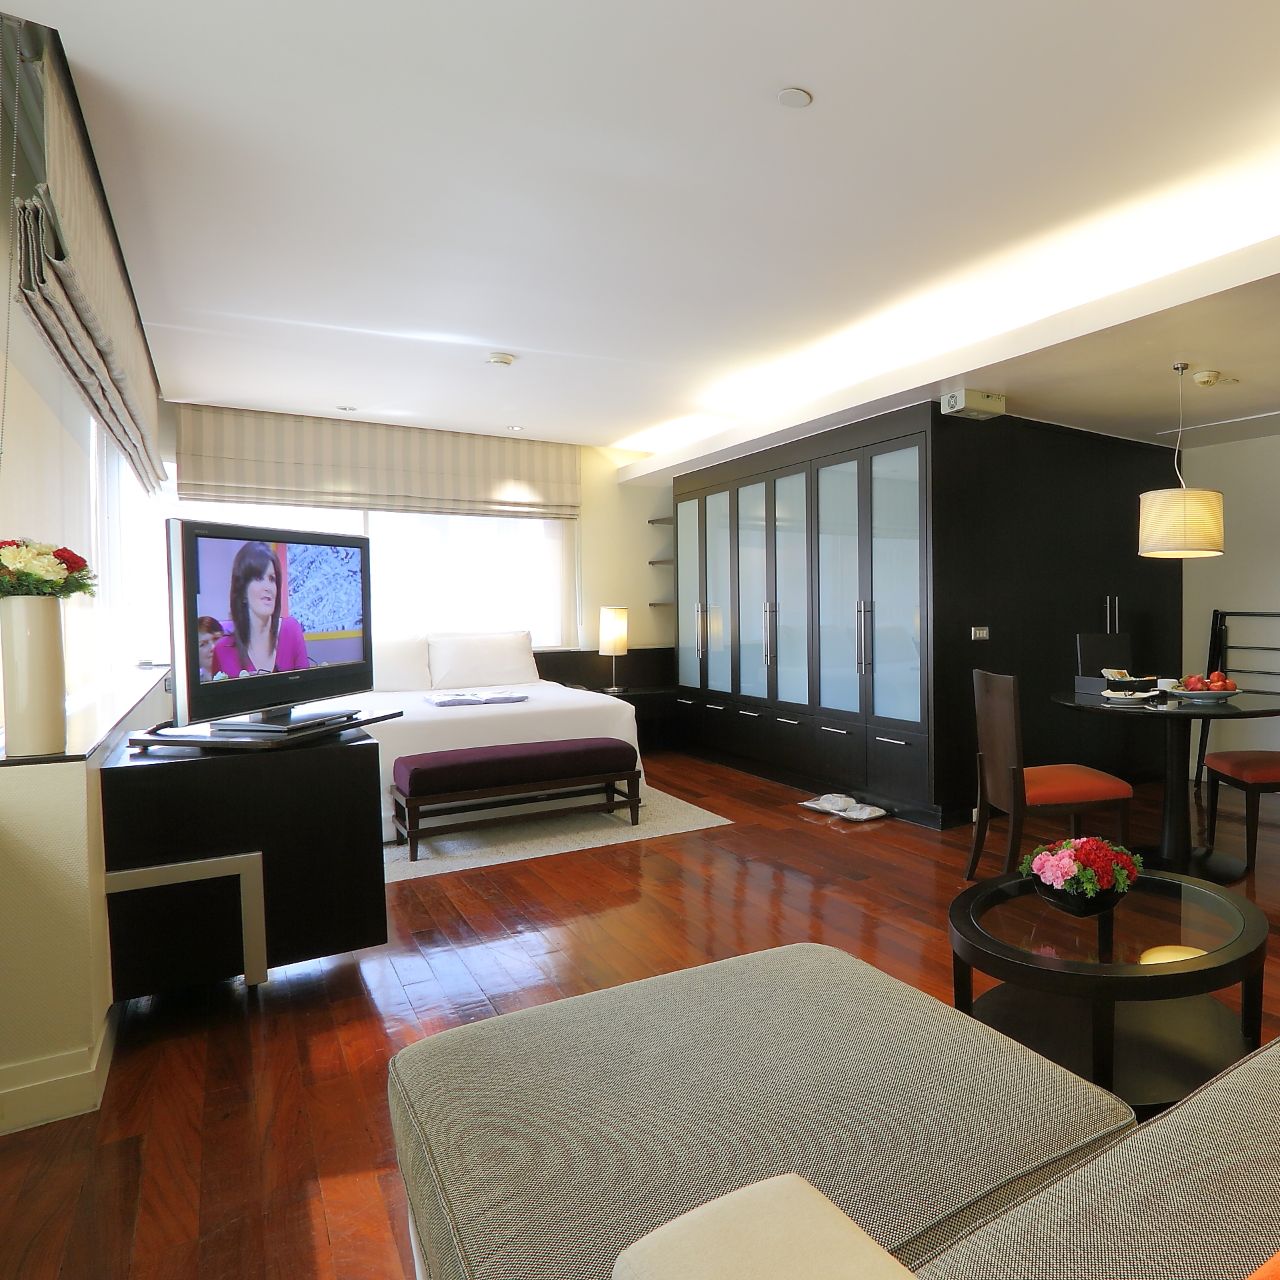 Grand Hyatt Erawan Bangkok Hotel Bangkok - Reviews, Photos & Offer